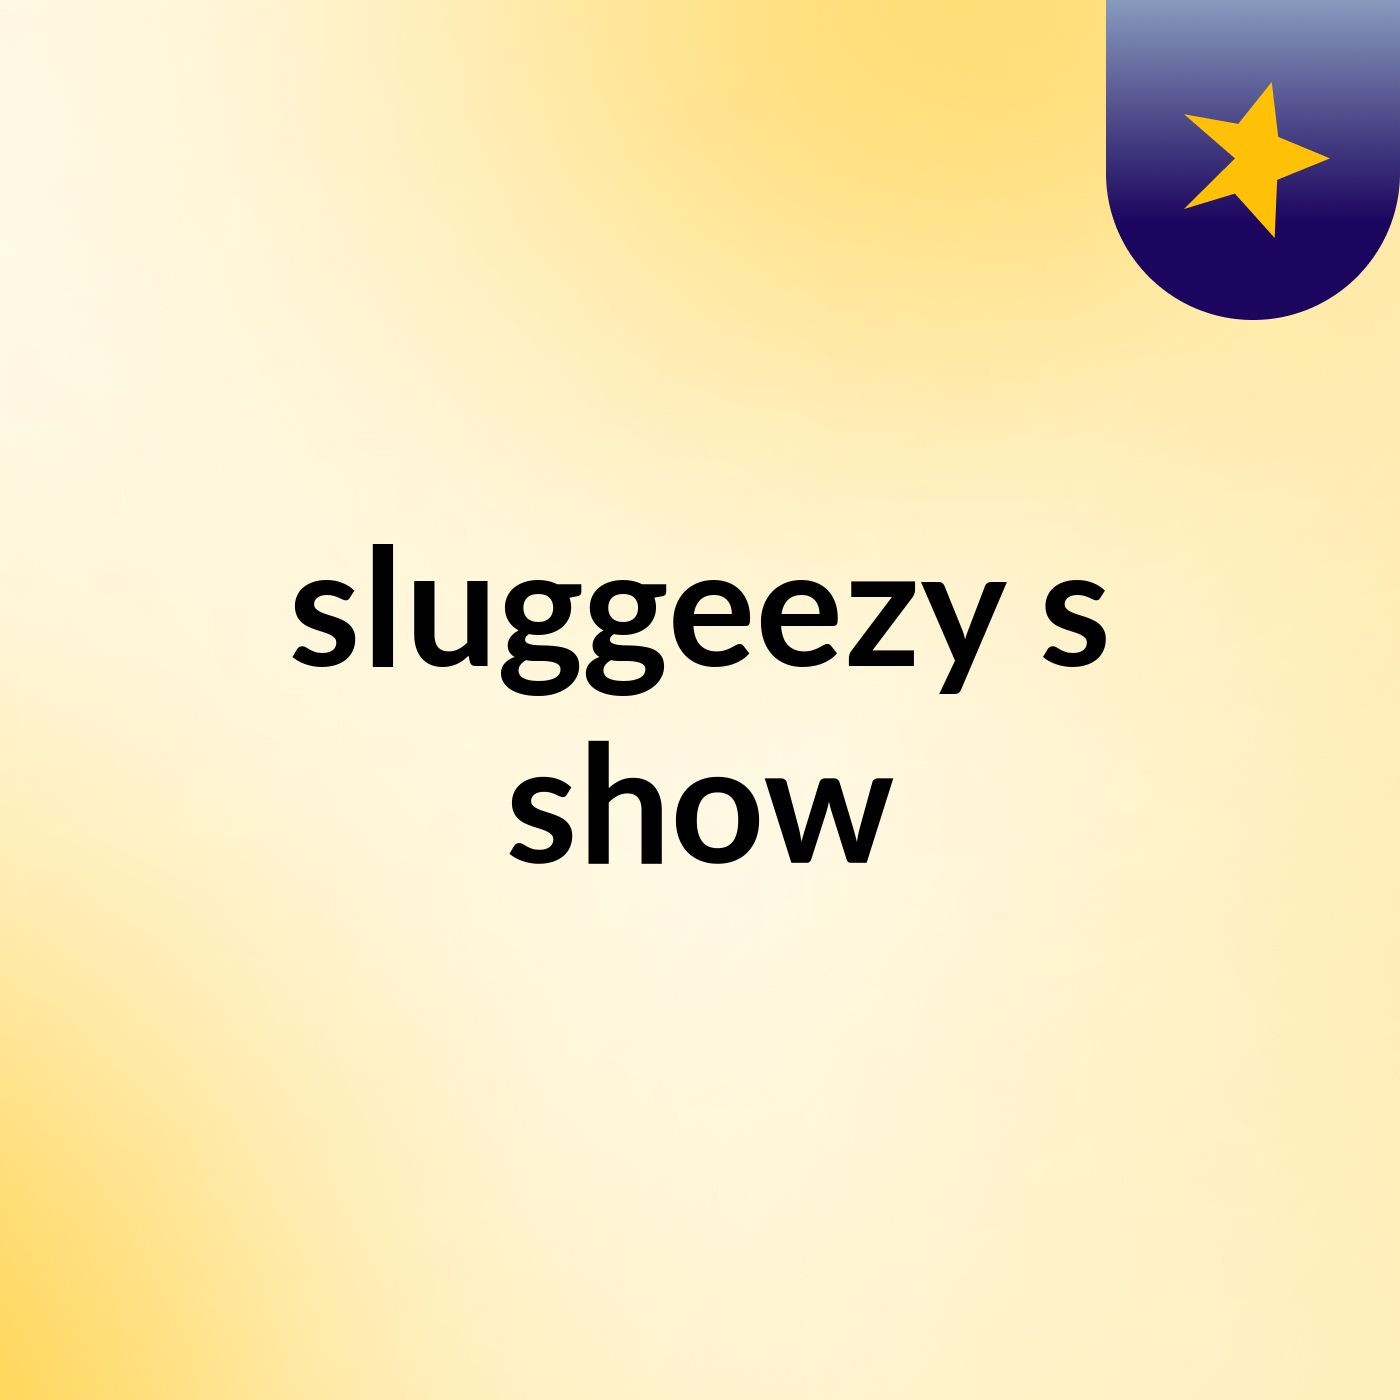 sluggeezy's show